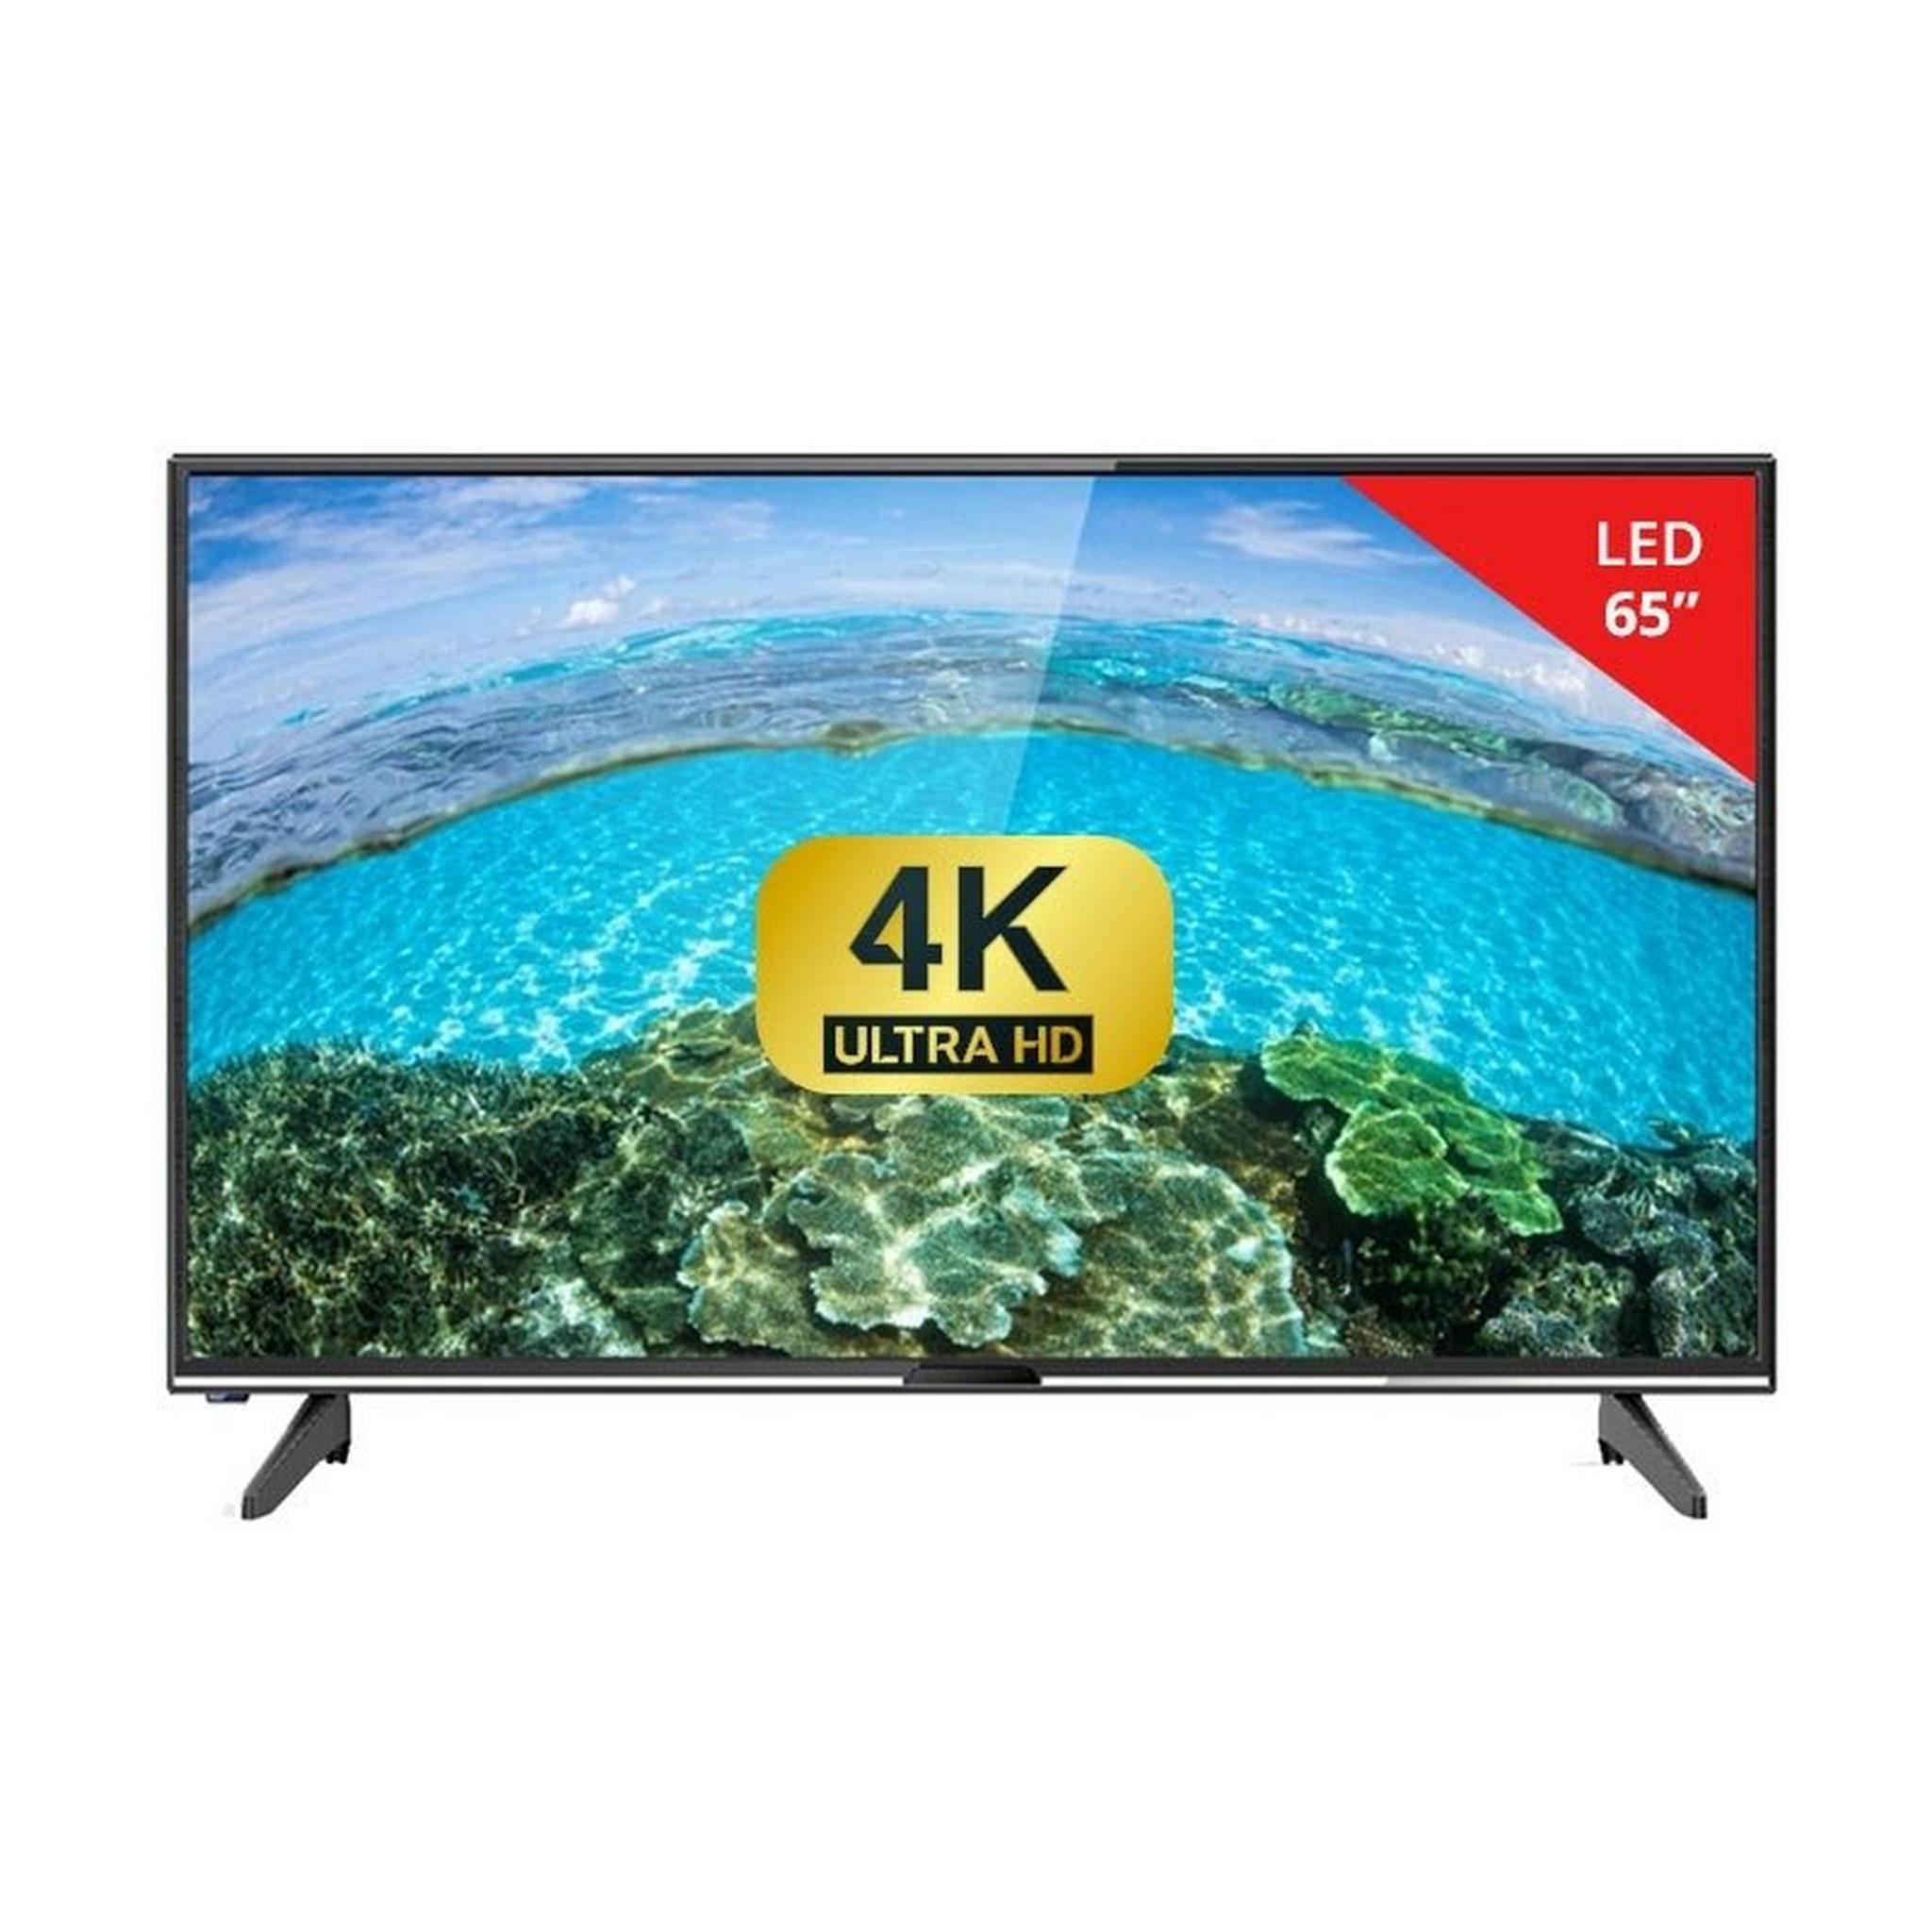 Wansa 65 inch 4K Ultra HD Smart LED TV - WUD65G8862S